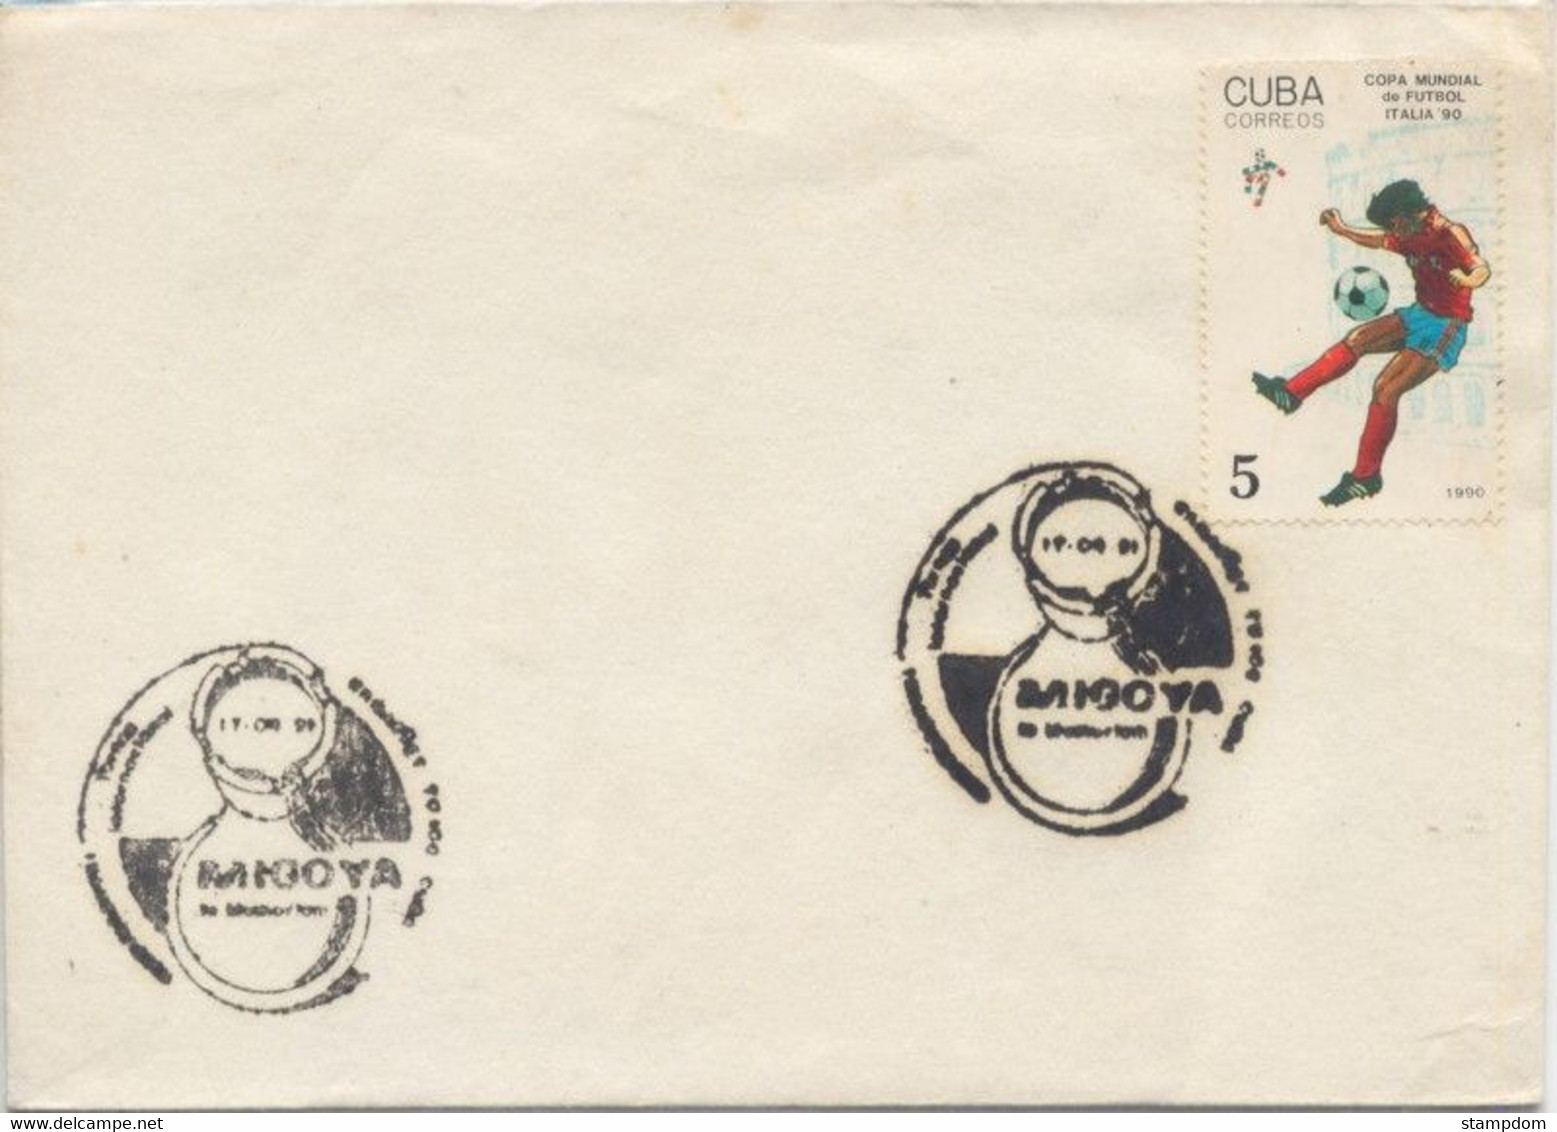 CUBA 1991 MIGOYA Special Cancel Event COVER @D1713 - Lettres & Documents